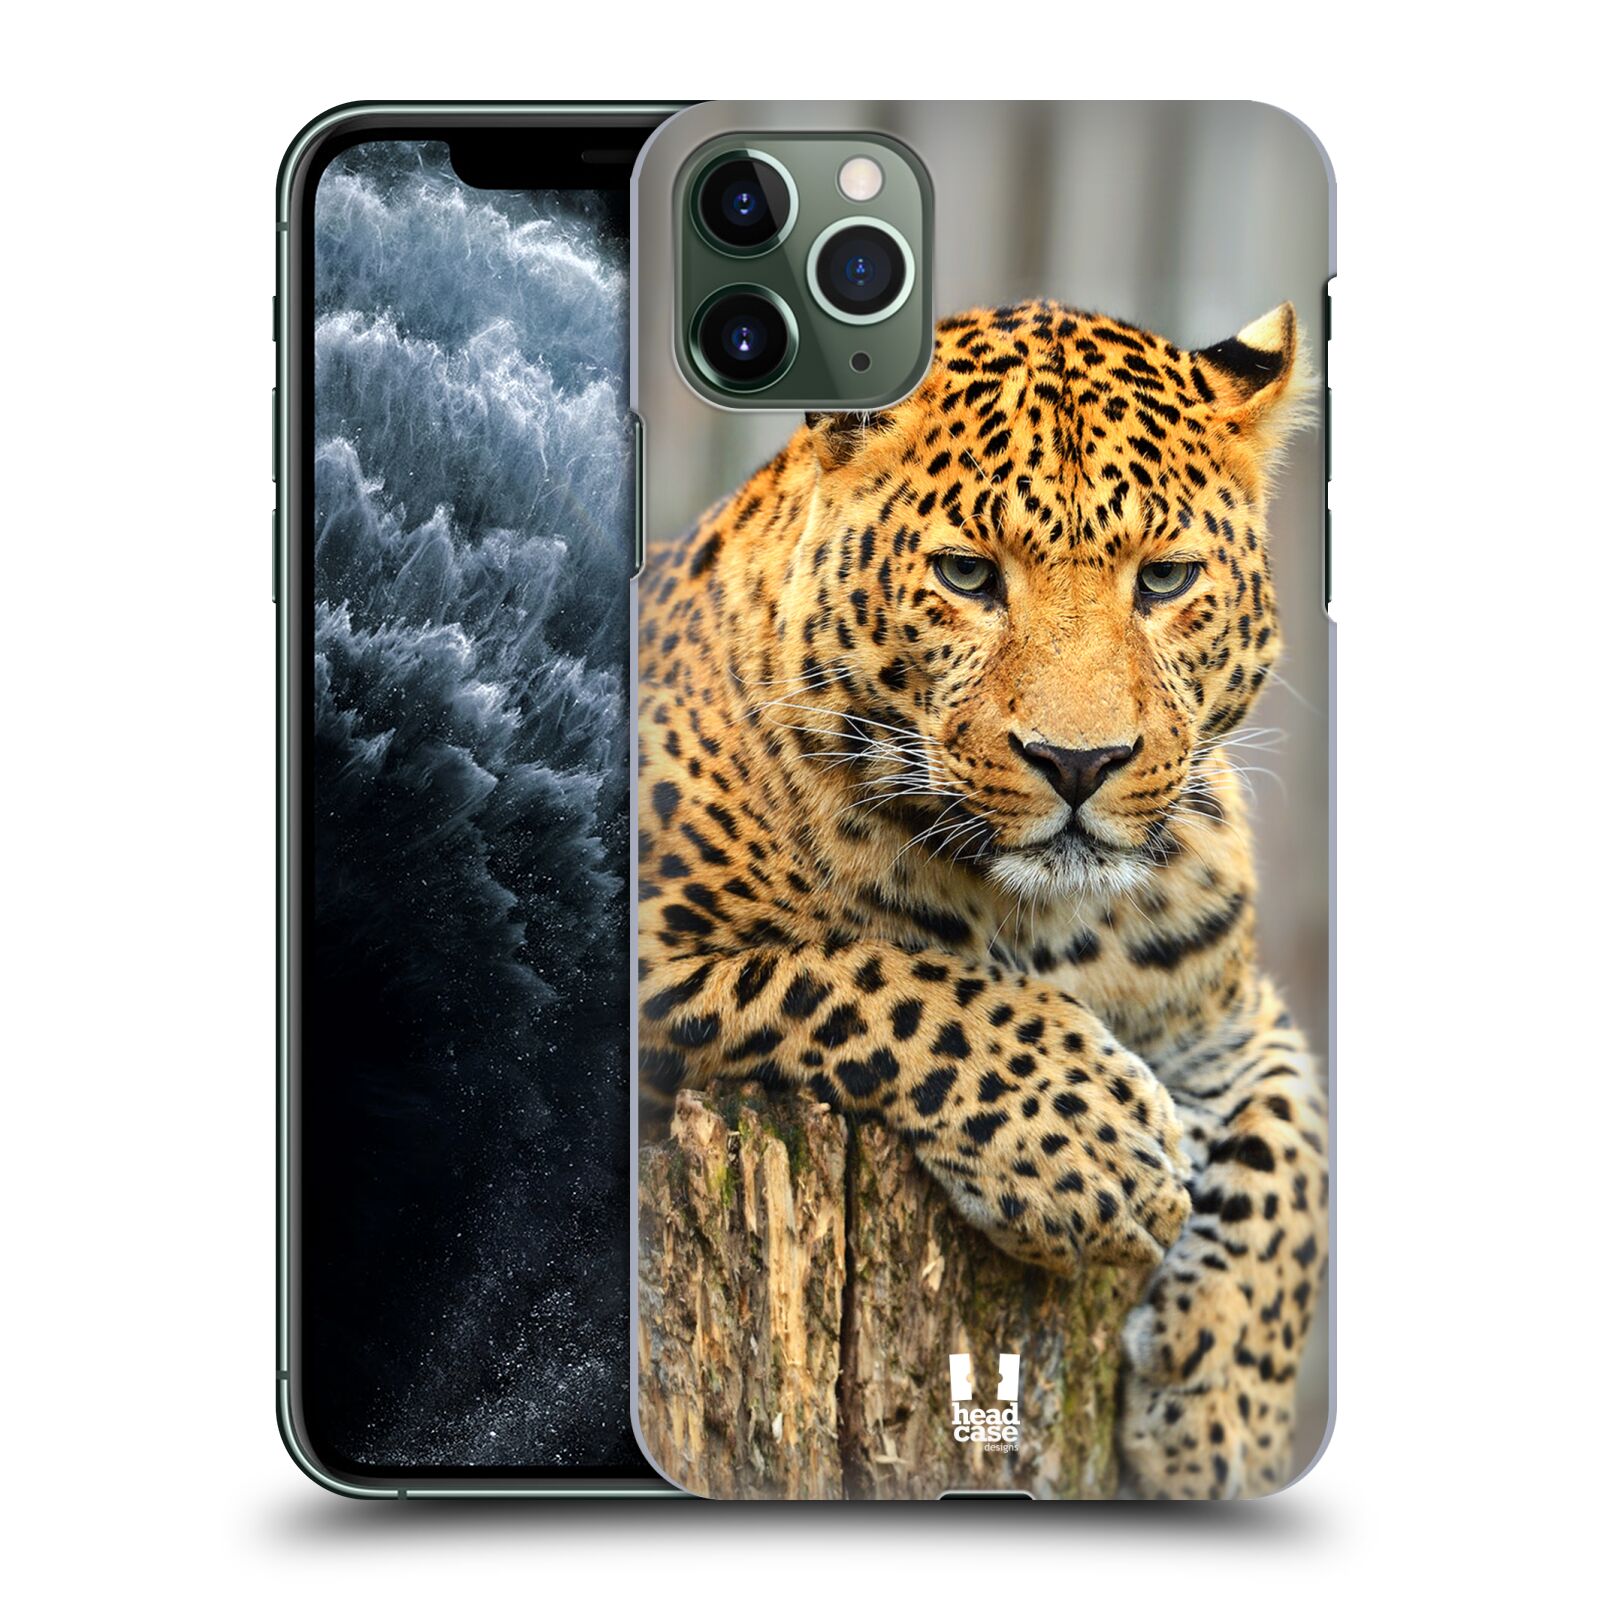 Pouzdro na mobil Apple Iphone 11 PRO MAX - HEAD CASE - vzor Divočina, Divoký život a zvířata foto LEOPARD PORTRÉT